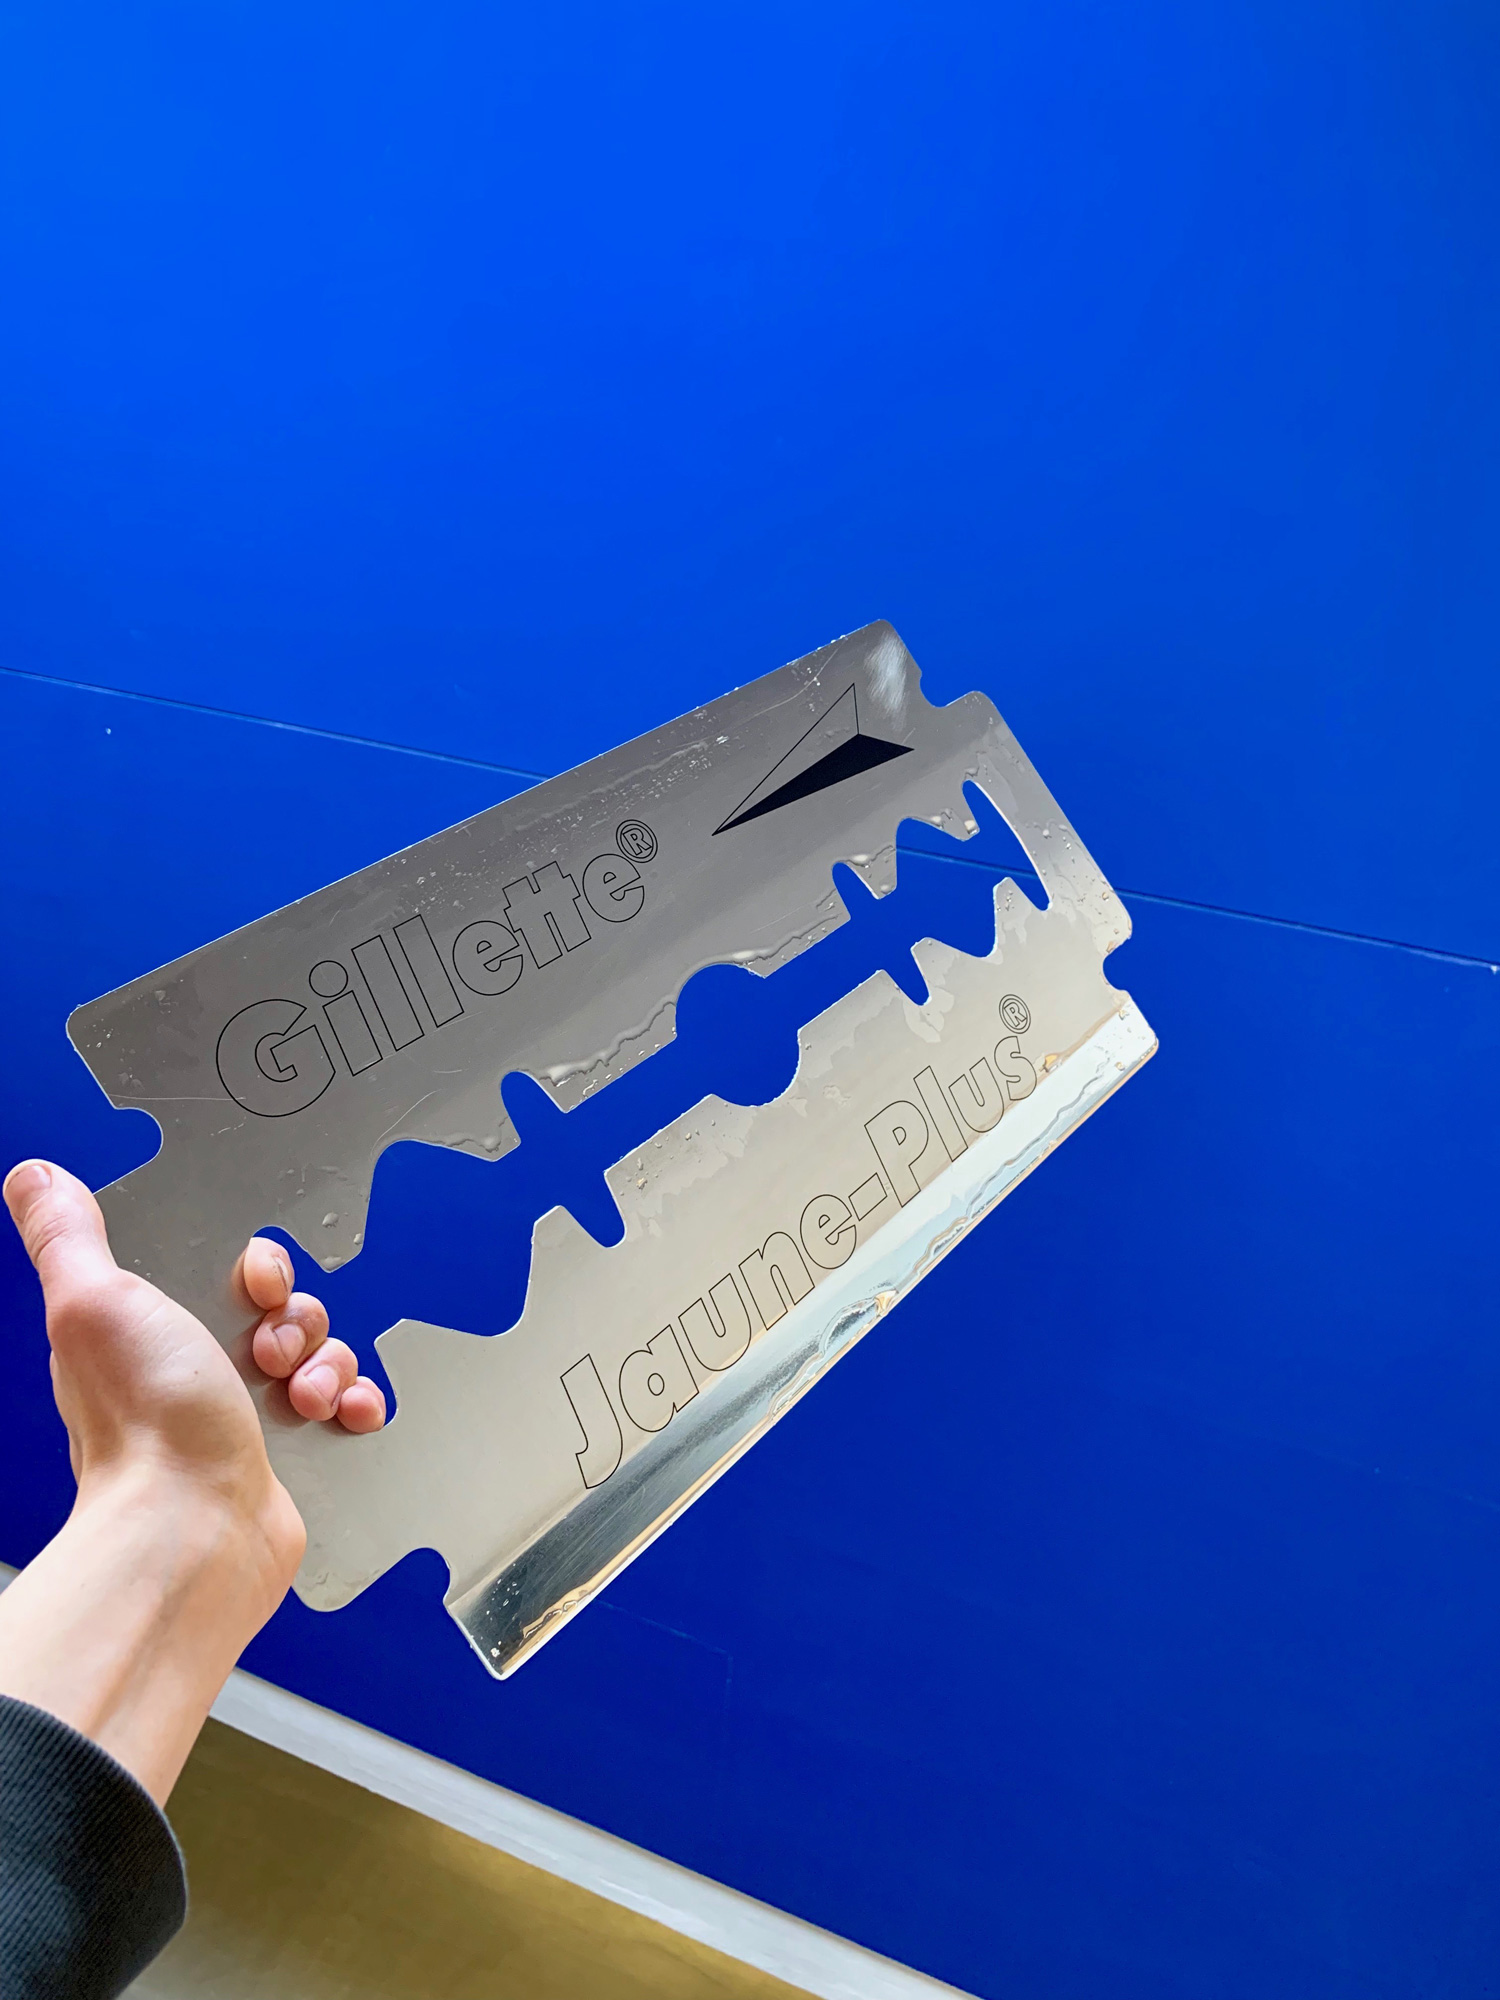 Gillette Jaune, engraving on aluminum, 2019, Ştefan Tănase